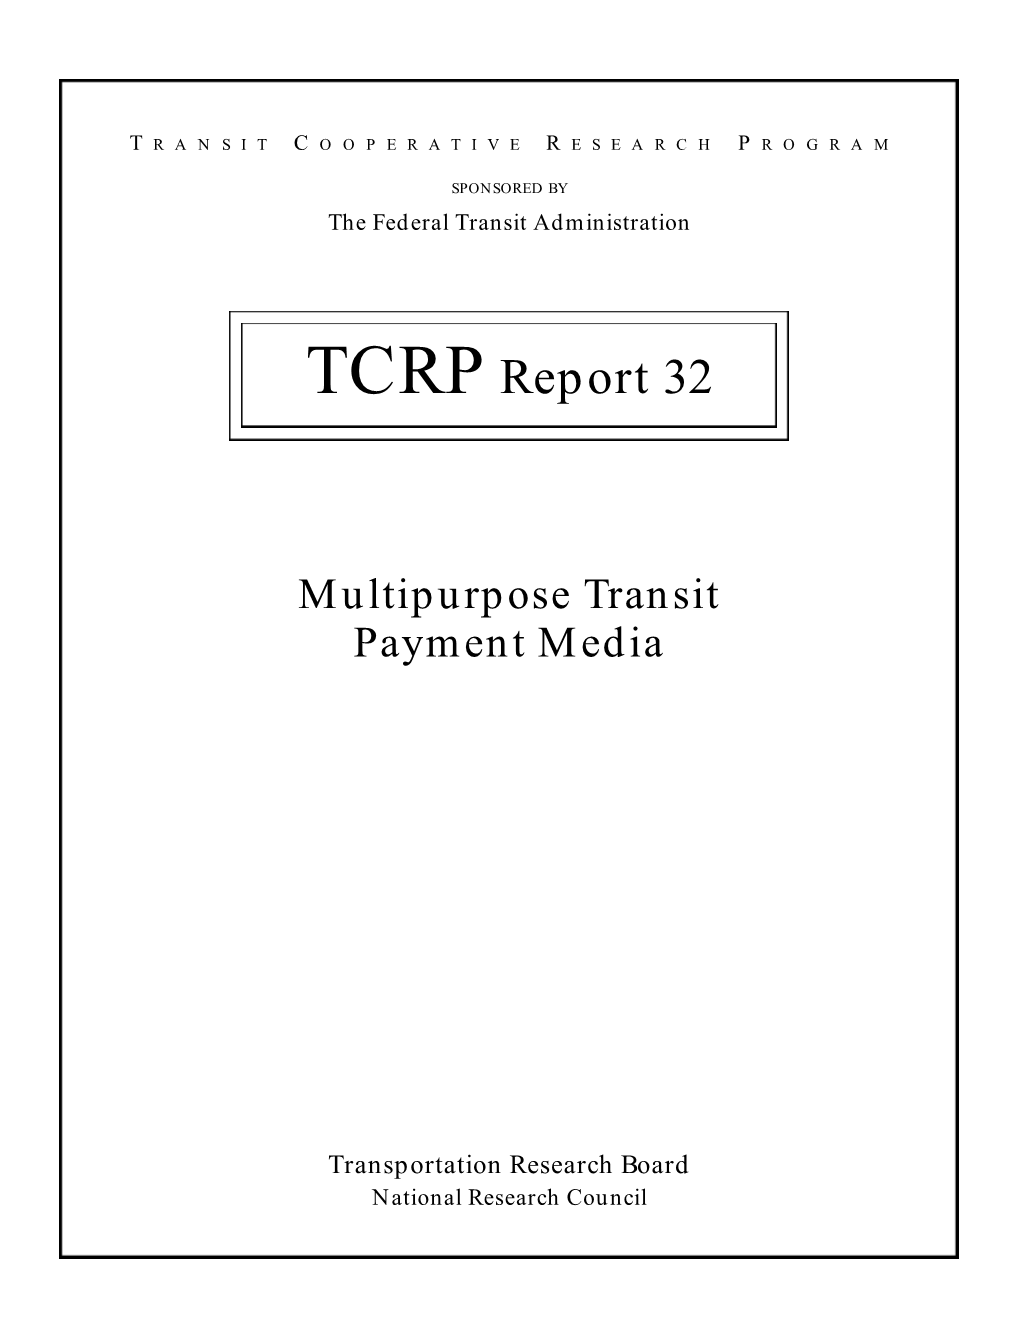 TCRP Report 32